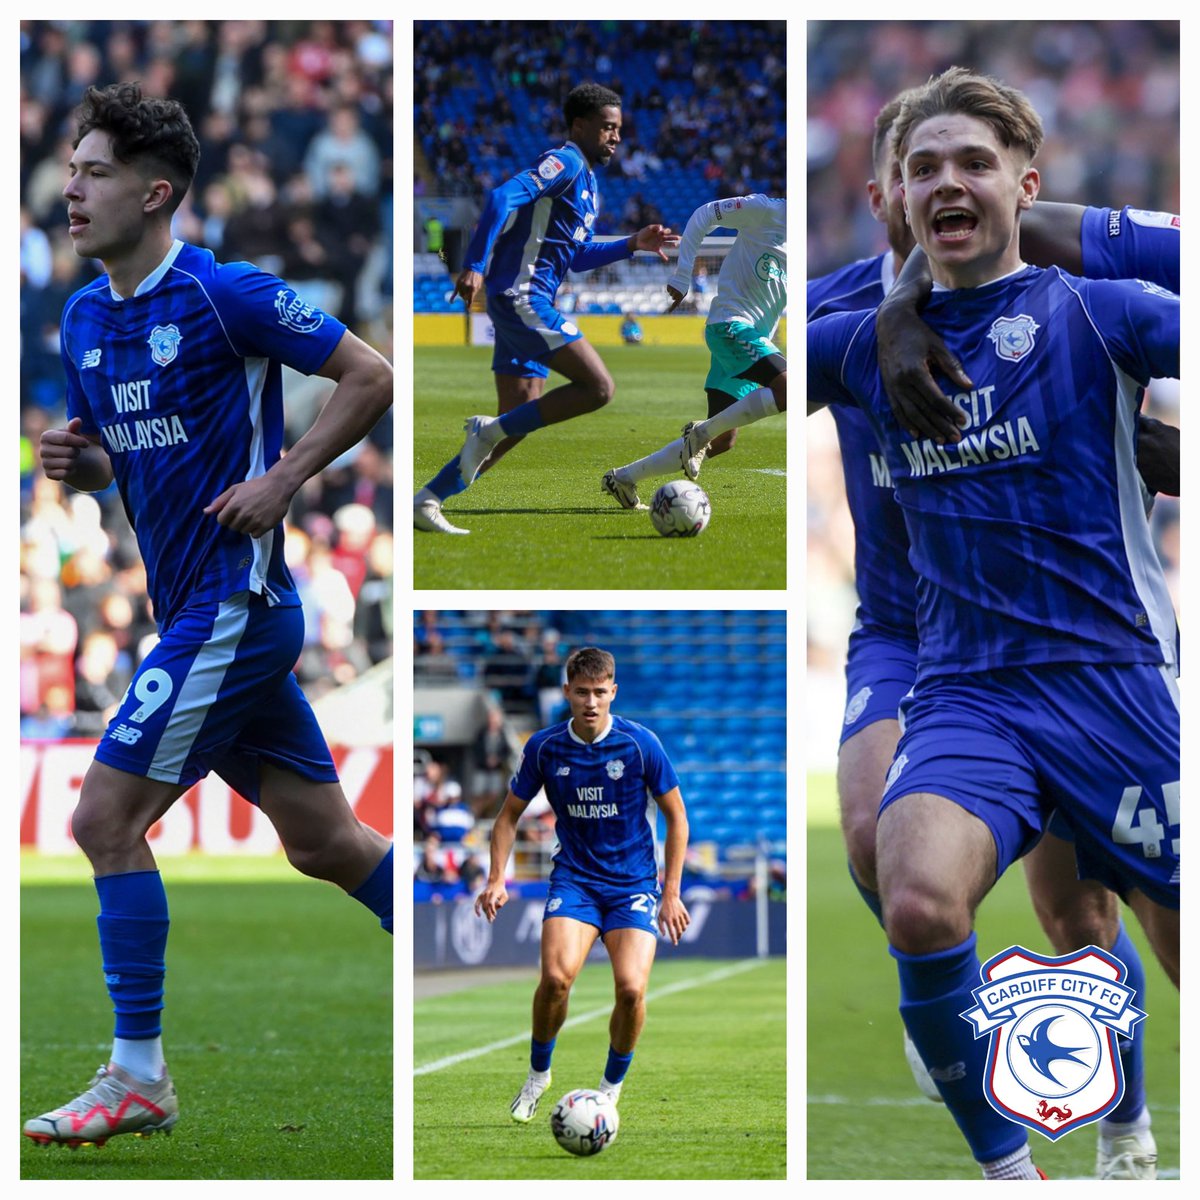 These lads today though !! 💪🏼💙😳🙌🏼 @CardiffCityFC #Bluebirds #CCFC #CityAsOne #FutureStars 👏🏼👏🏼👏🏼👏🏼👏🏼👏🏼👏🏼👏🏼